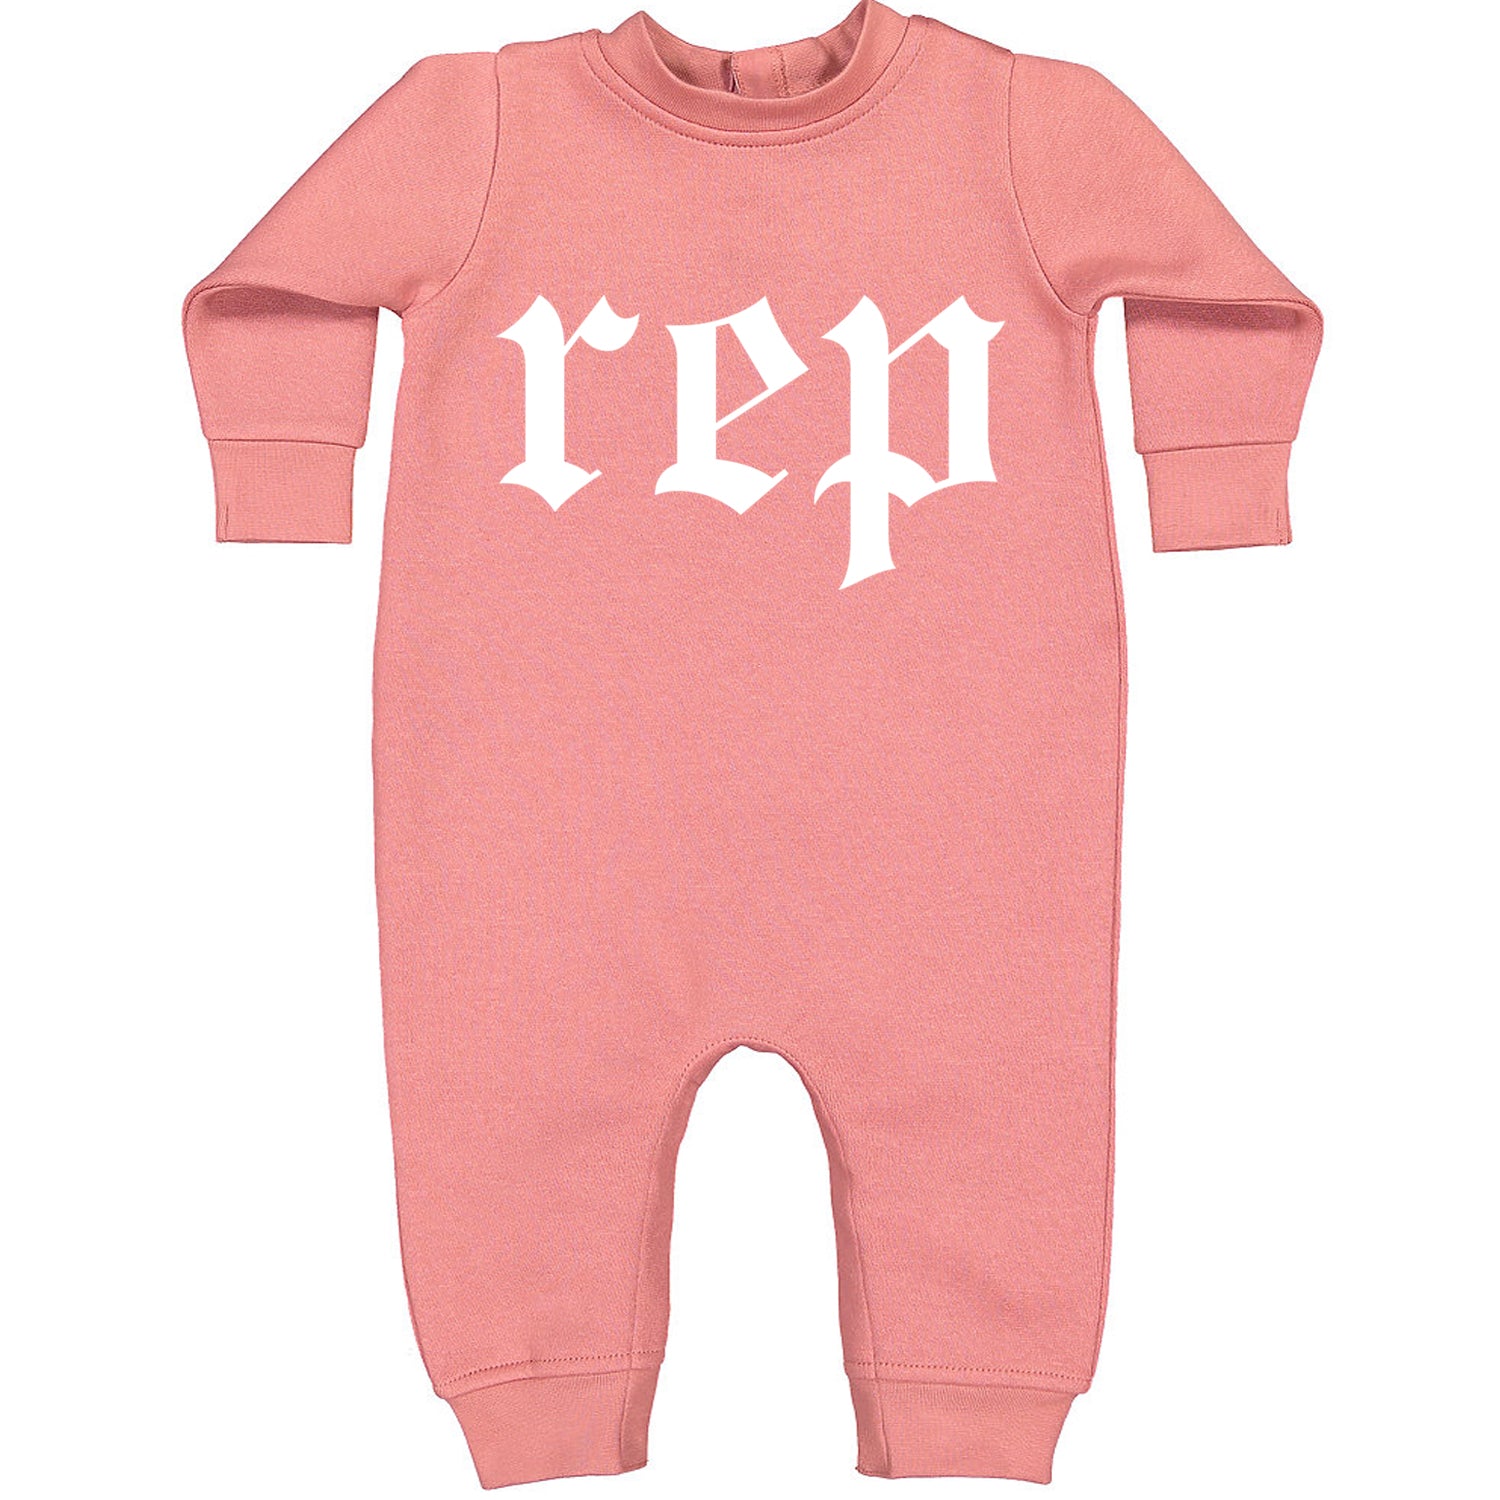 REP Reputation Eras Music Lover Gift Fan Favorite Toddler Hoodie And Infant Fleece Romper Mauve